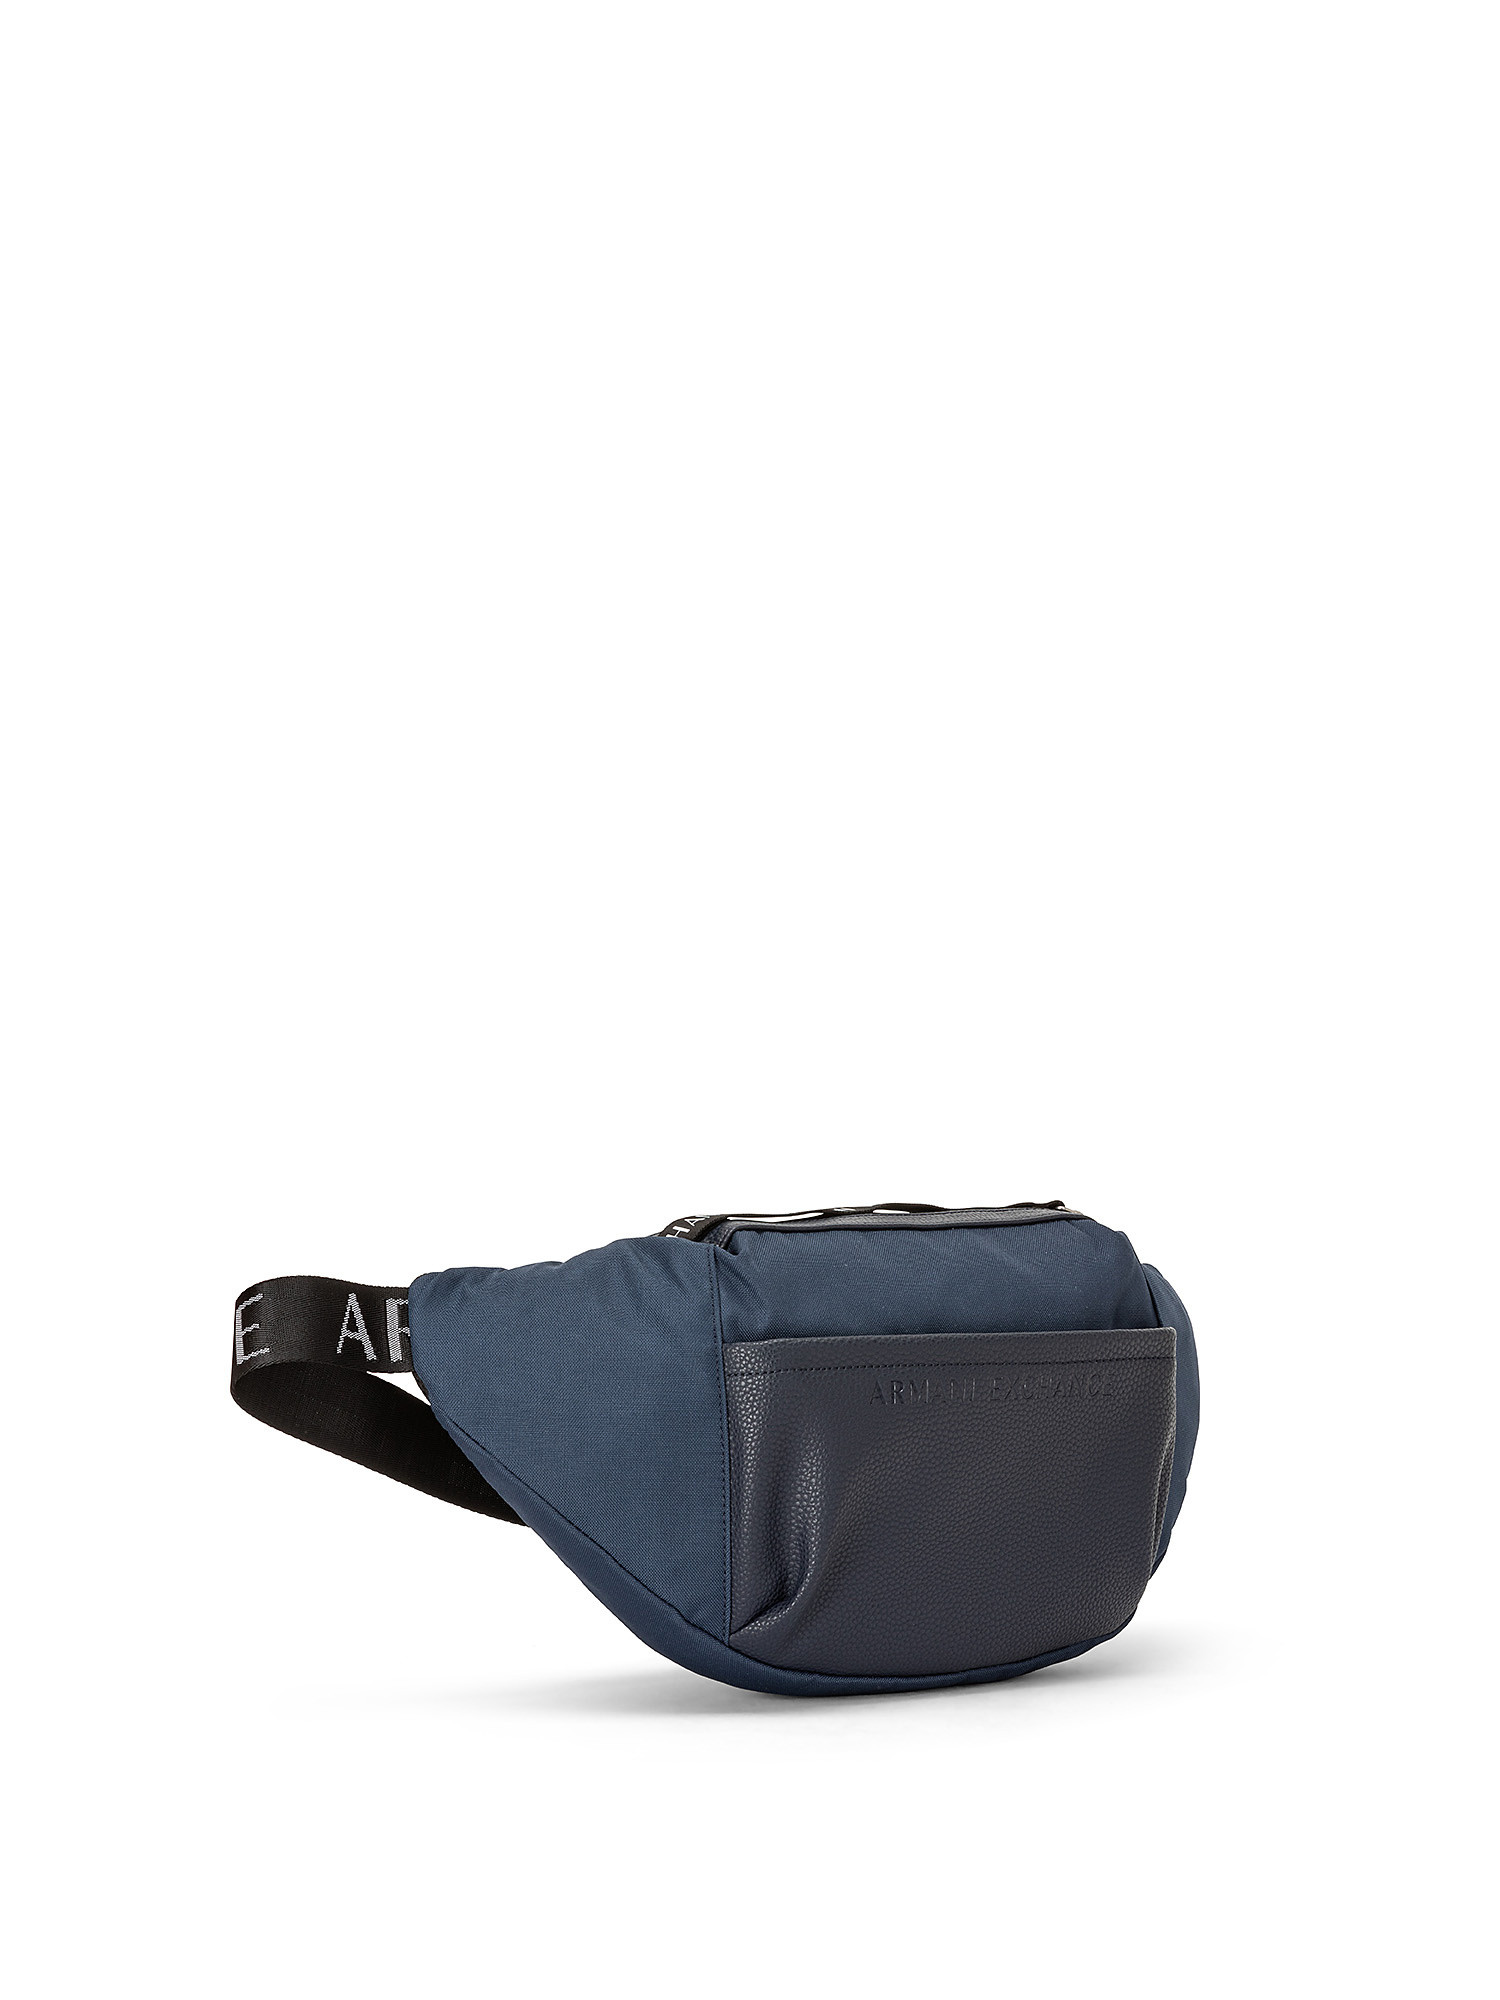 Armani Exchange - Waist bag with logo tape, Blue, large image number 1